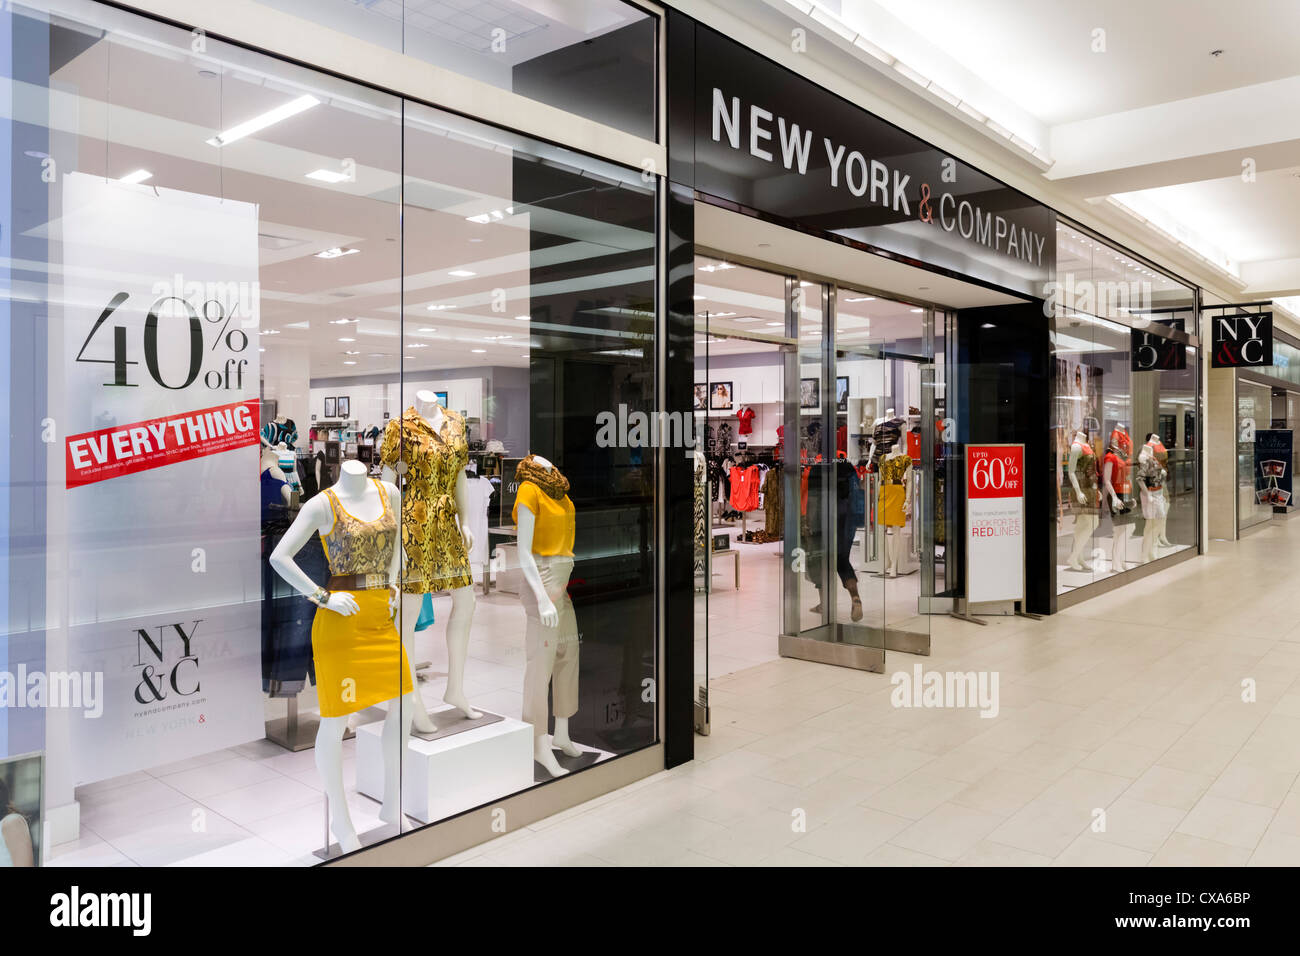 New York & Company store in the Mall of America, Bloomington, Minneapolis,  Minnesota, USA Stock Photo - Alamy